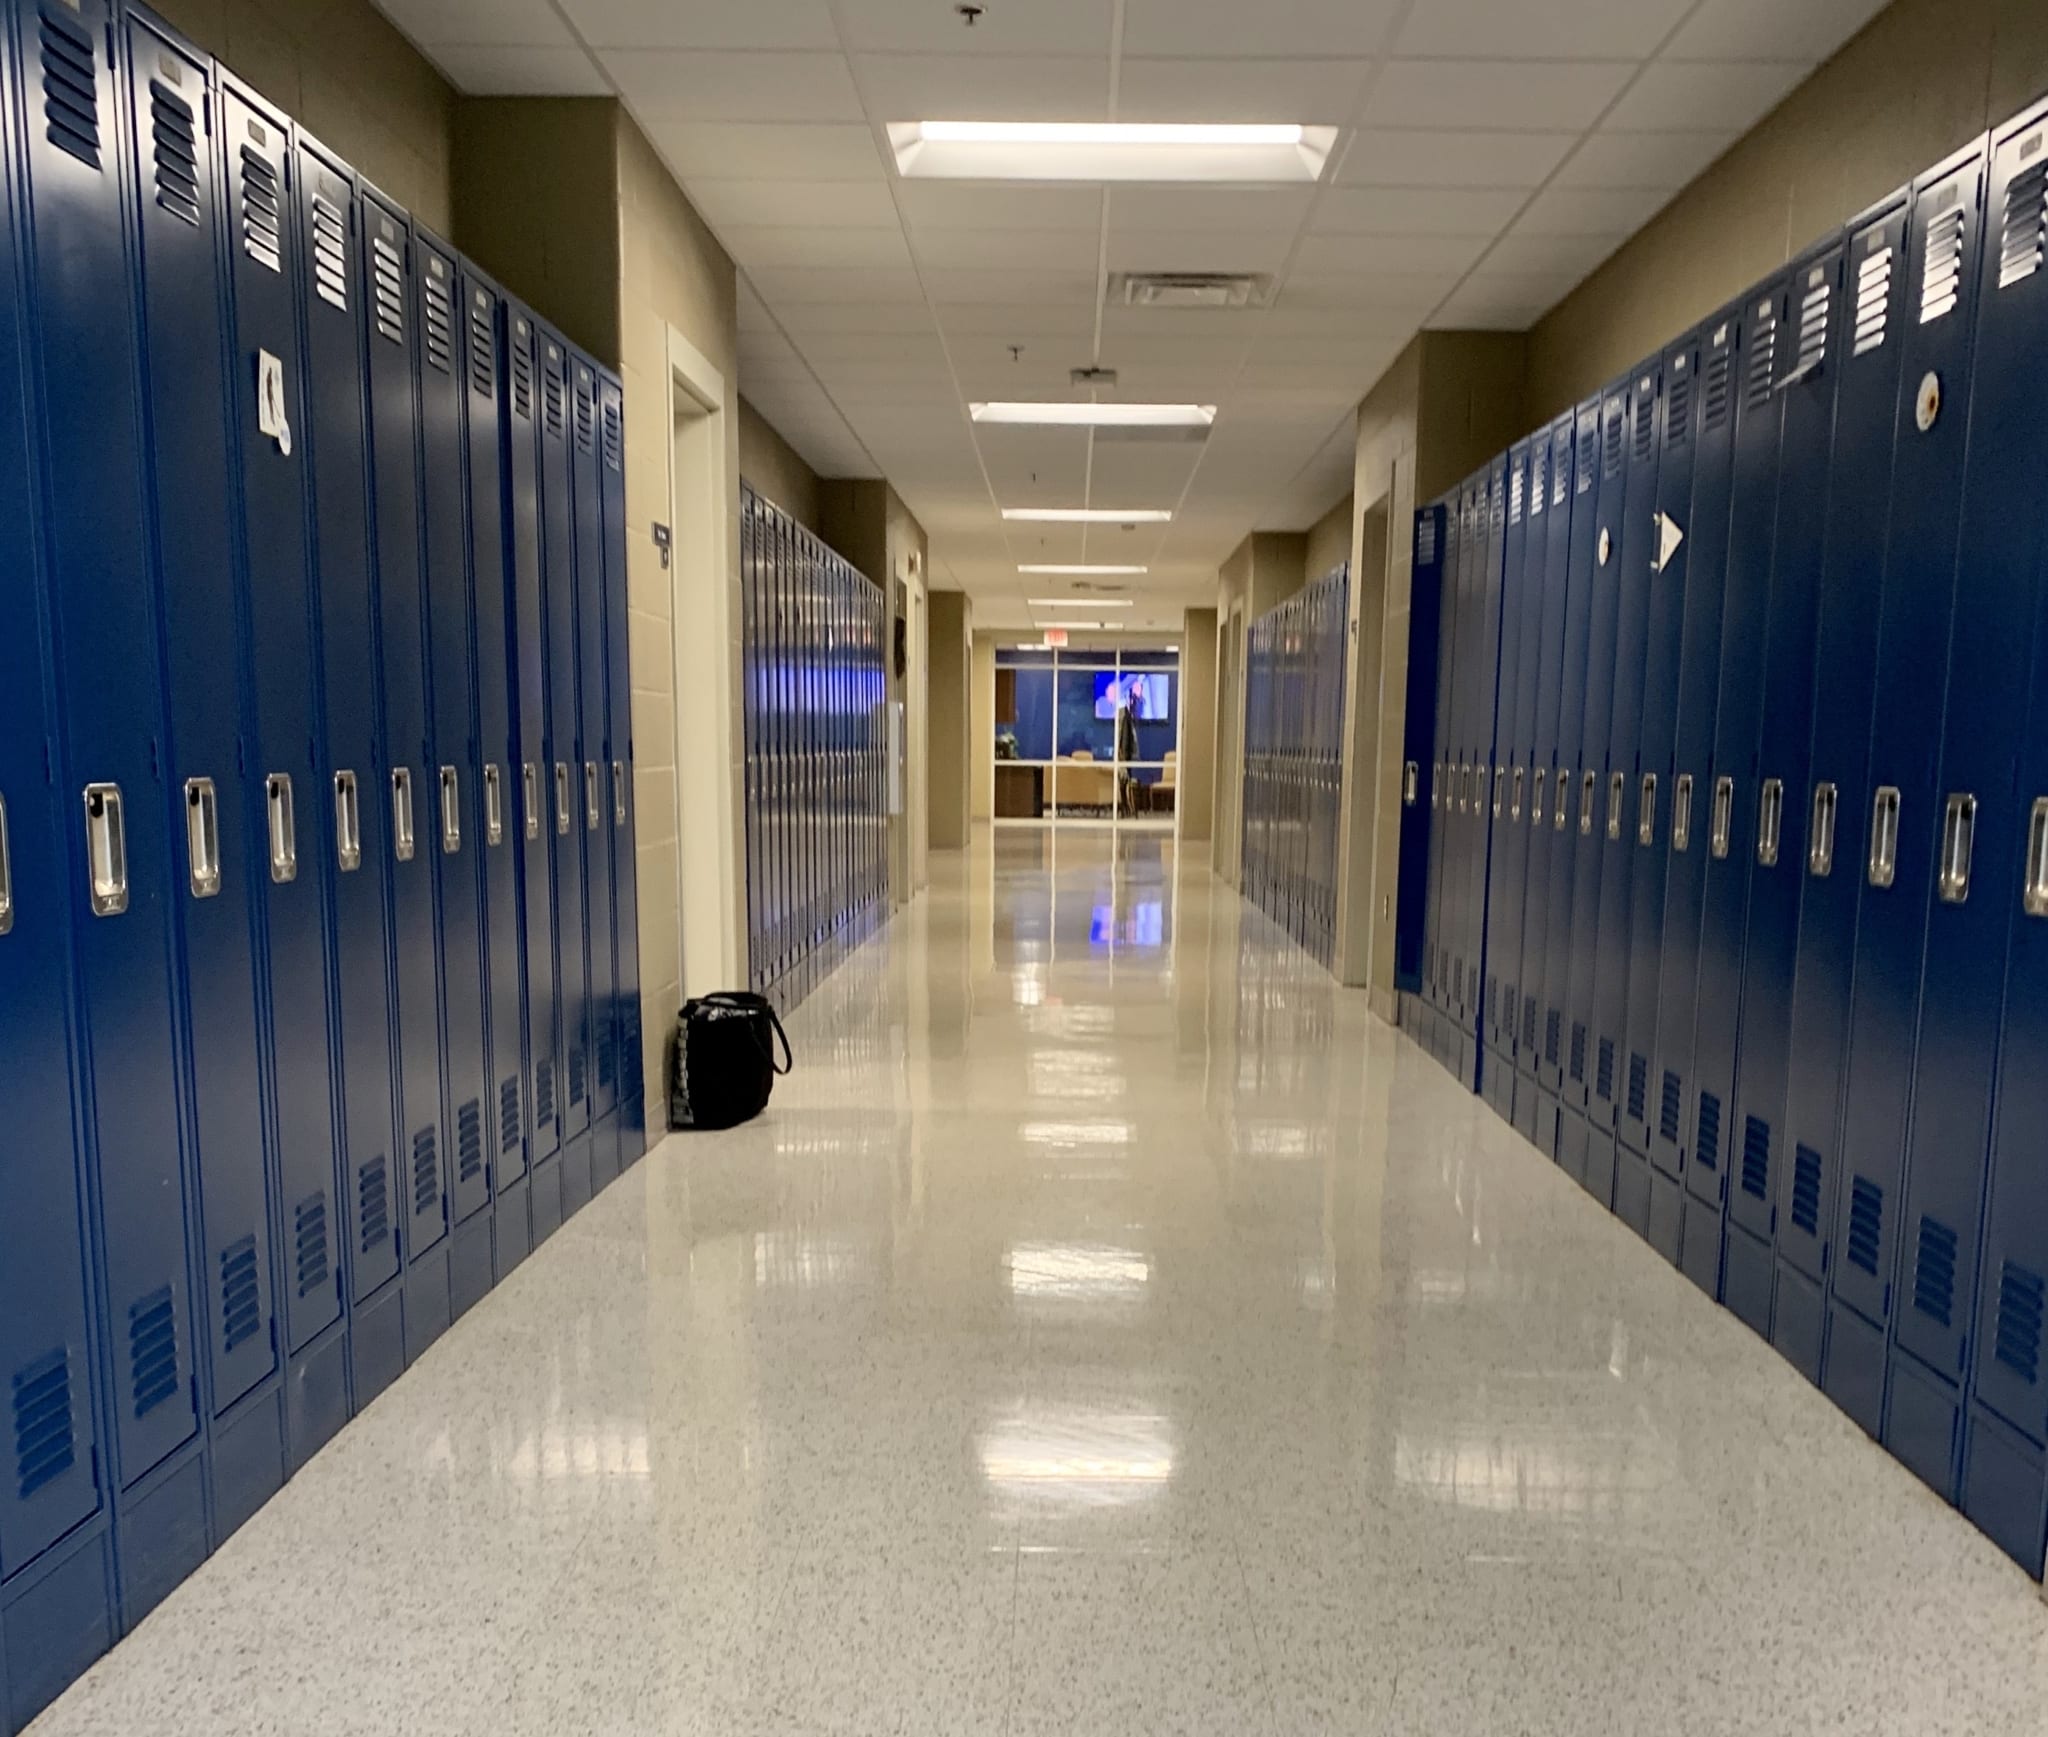 Empty school hallway with blue lockers